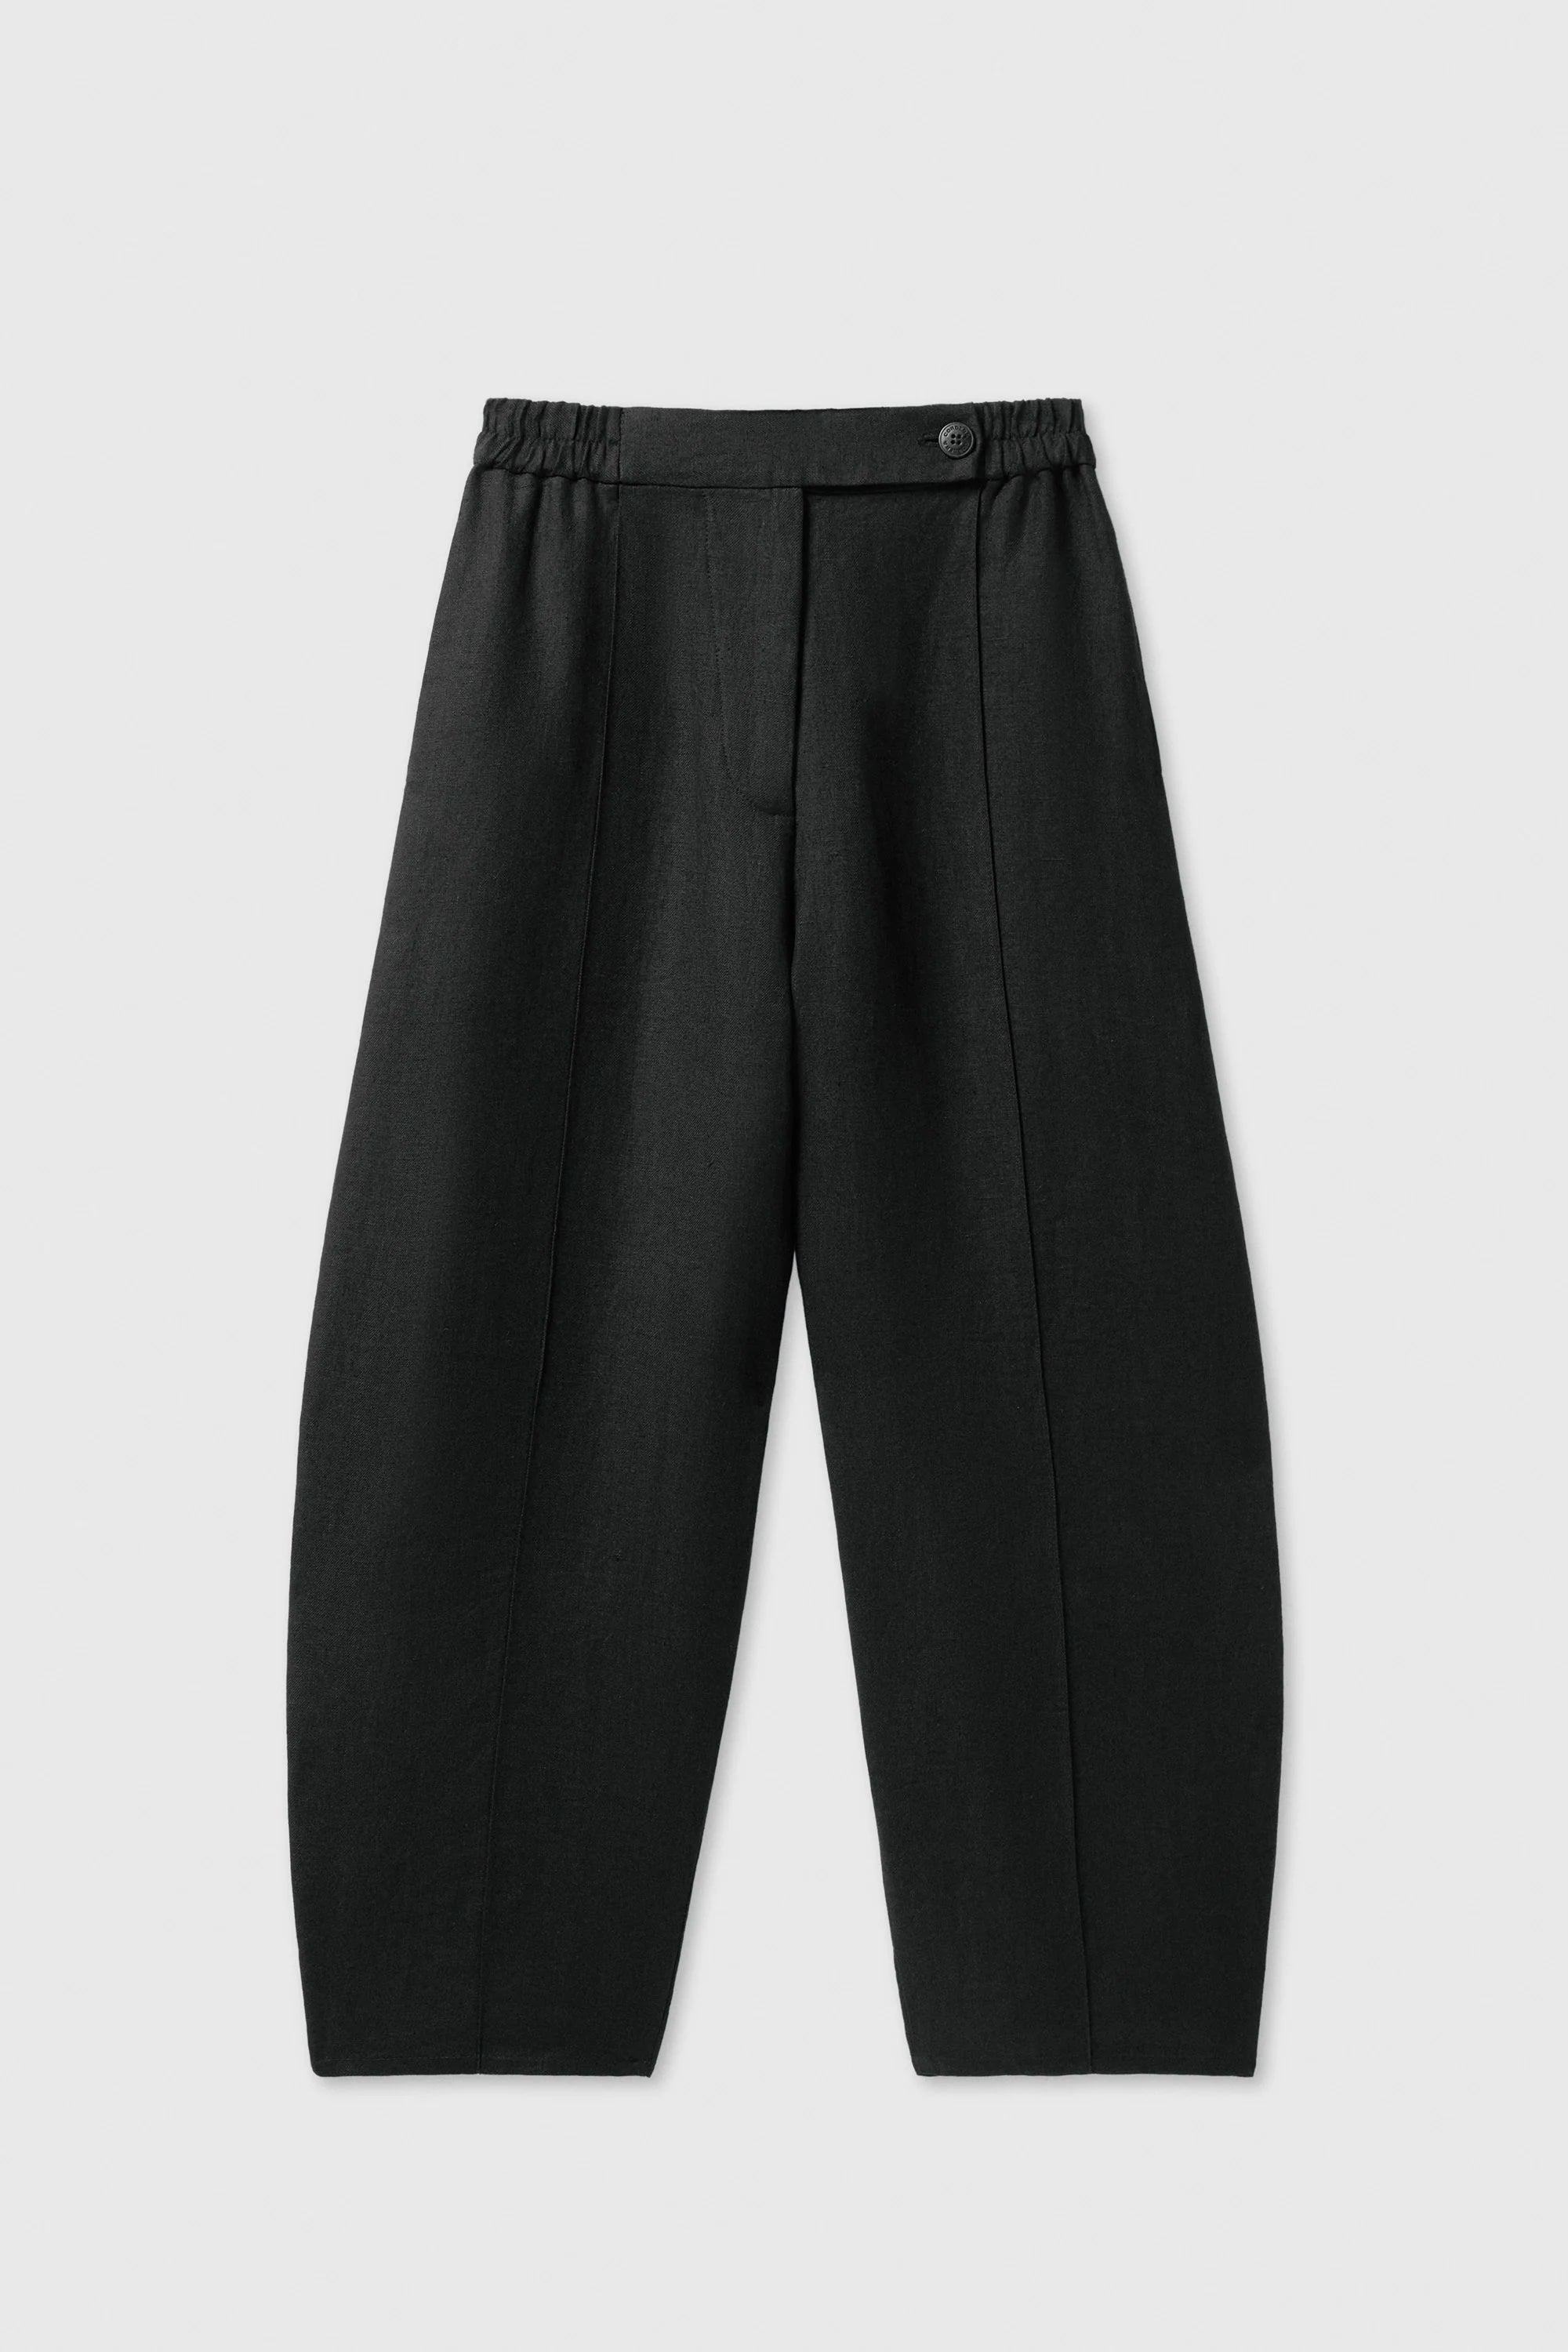 Cordera Linen Curved Pants / Black